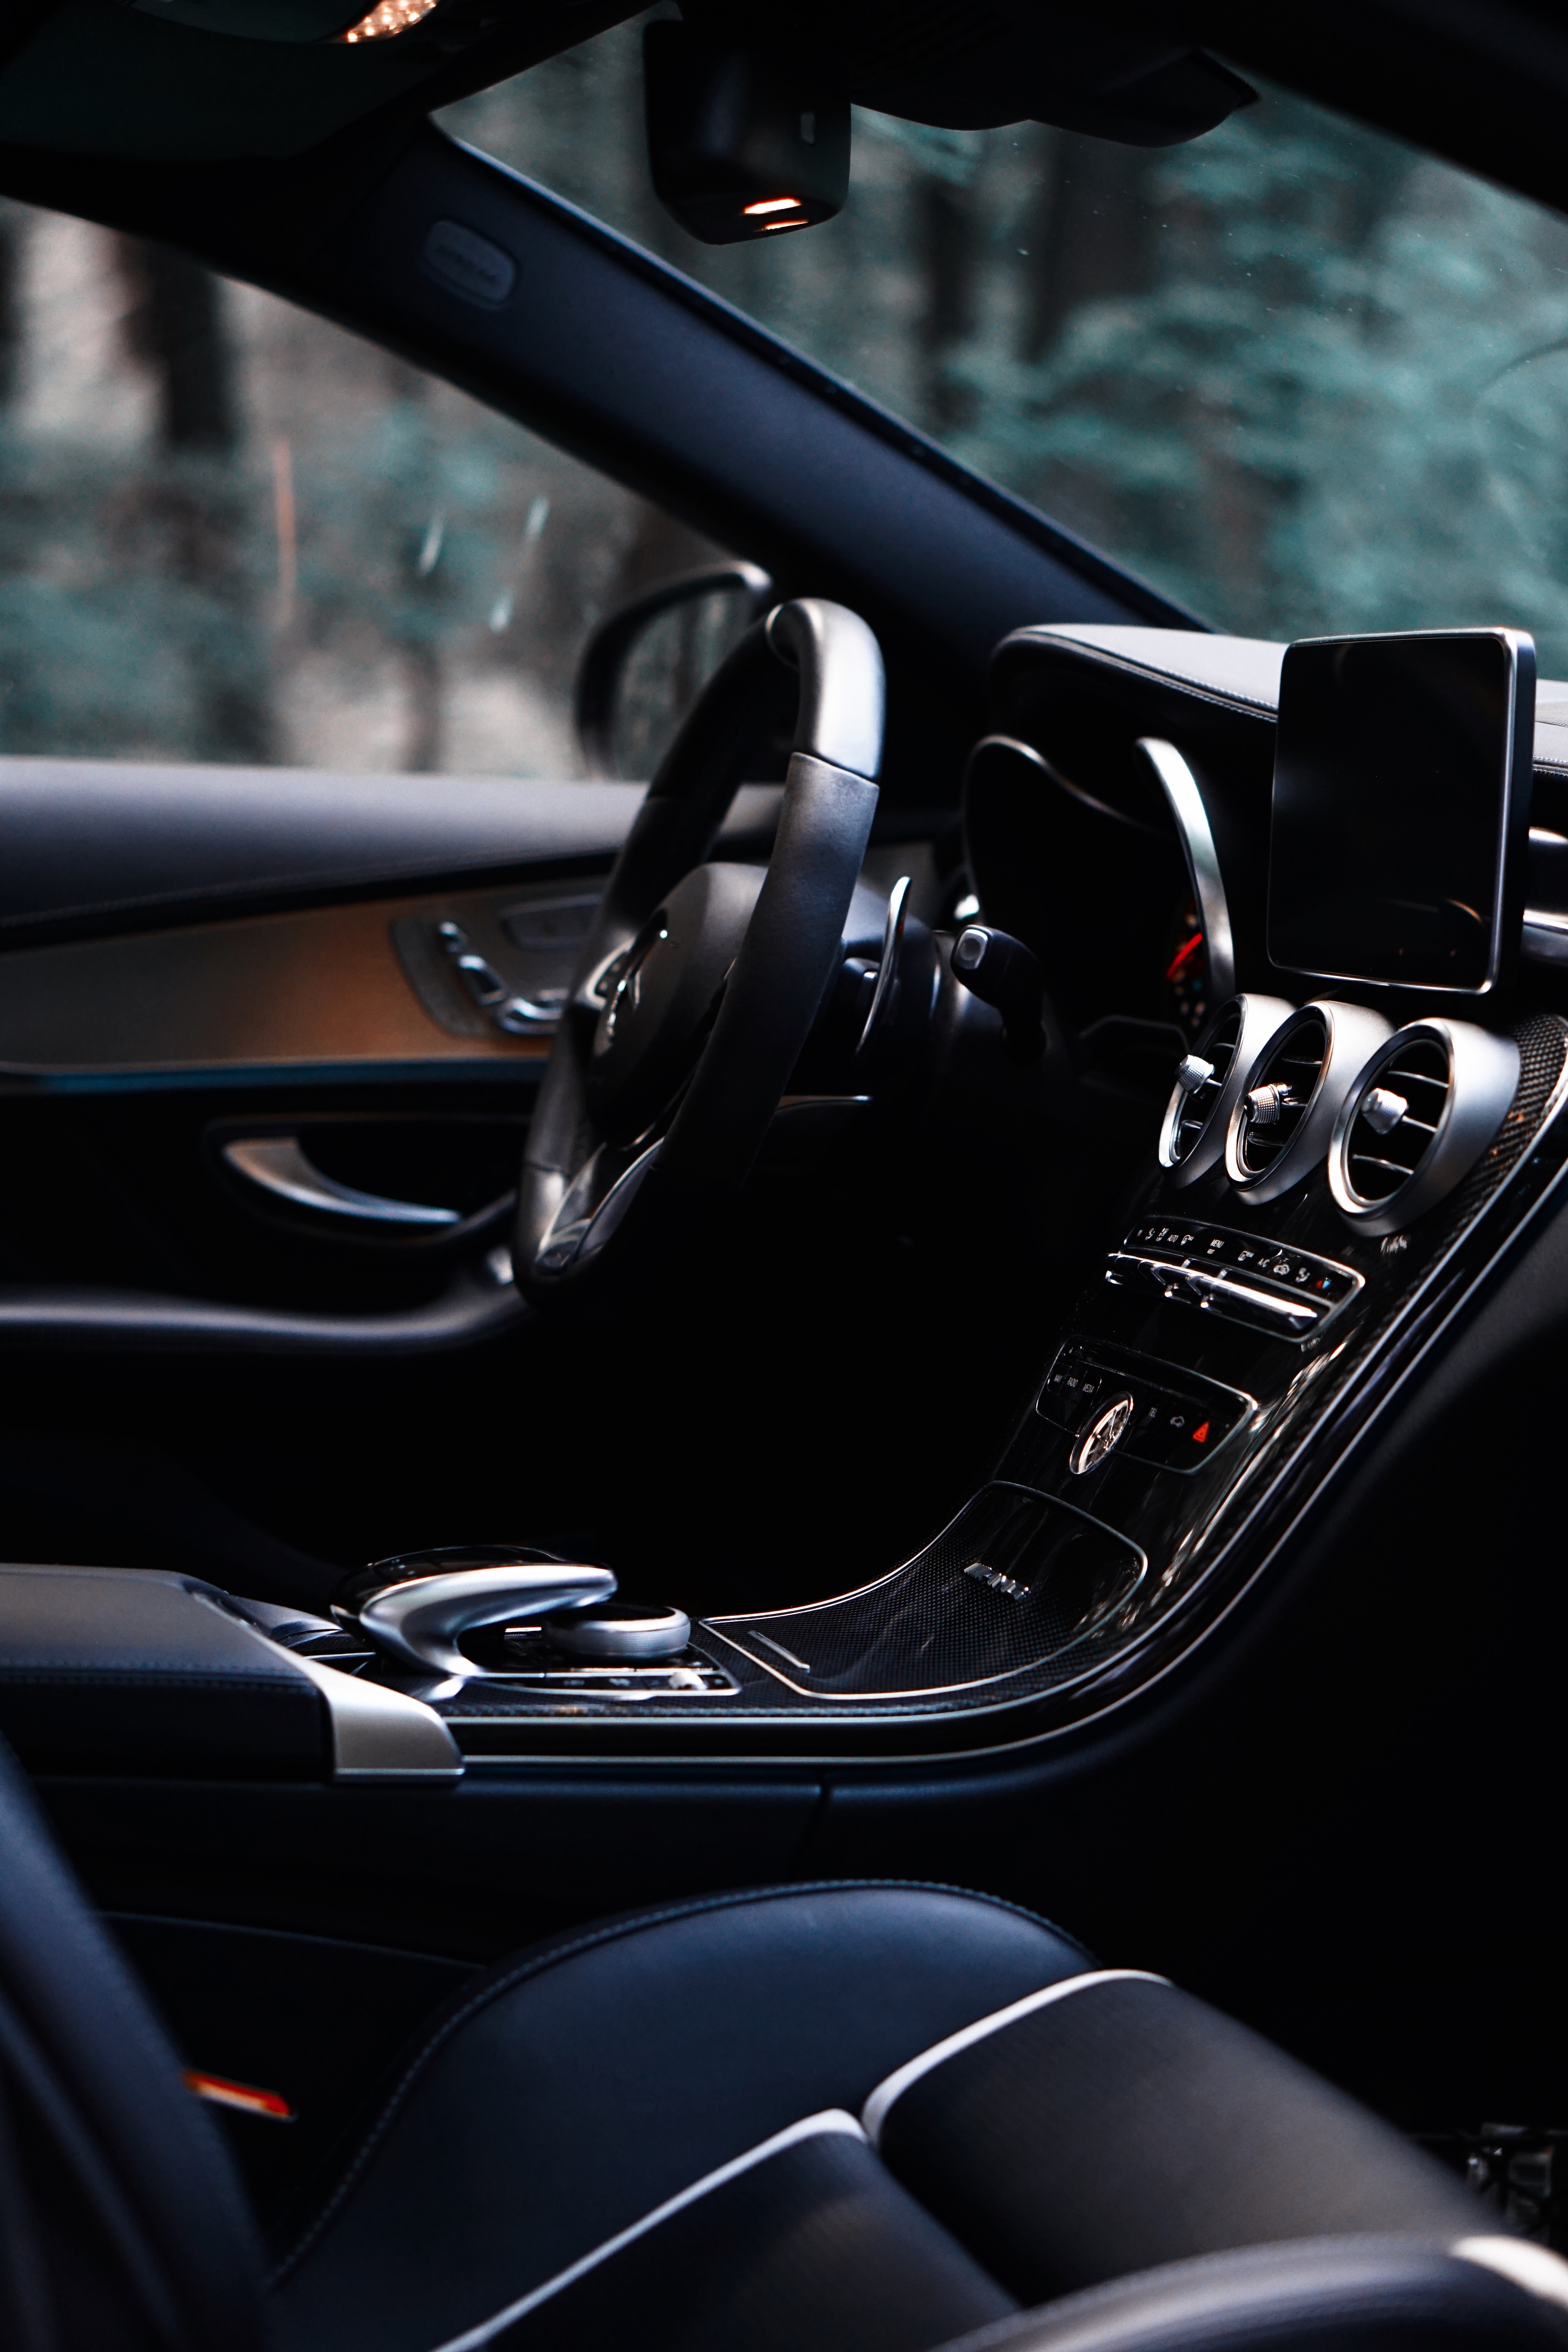 salon, rudder, cars, interior, black, car, machine, steering wheel, control panel Full HD